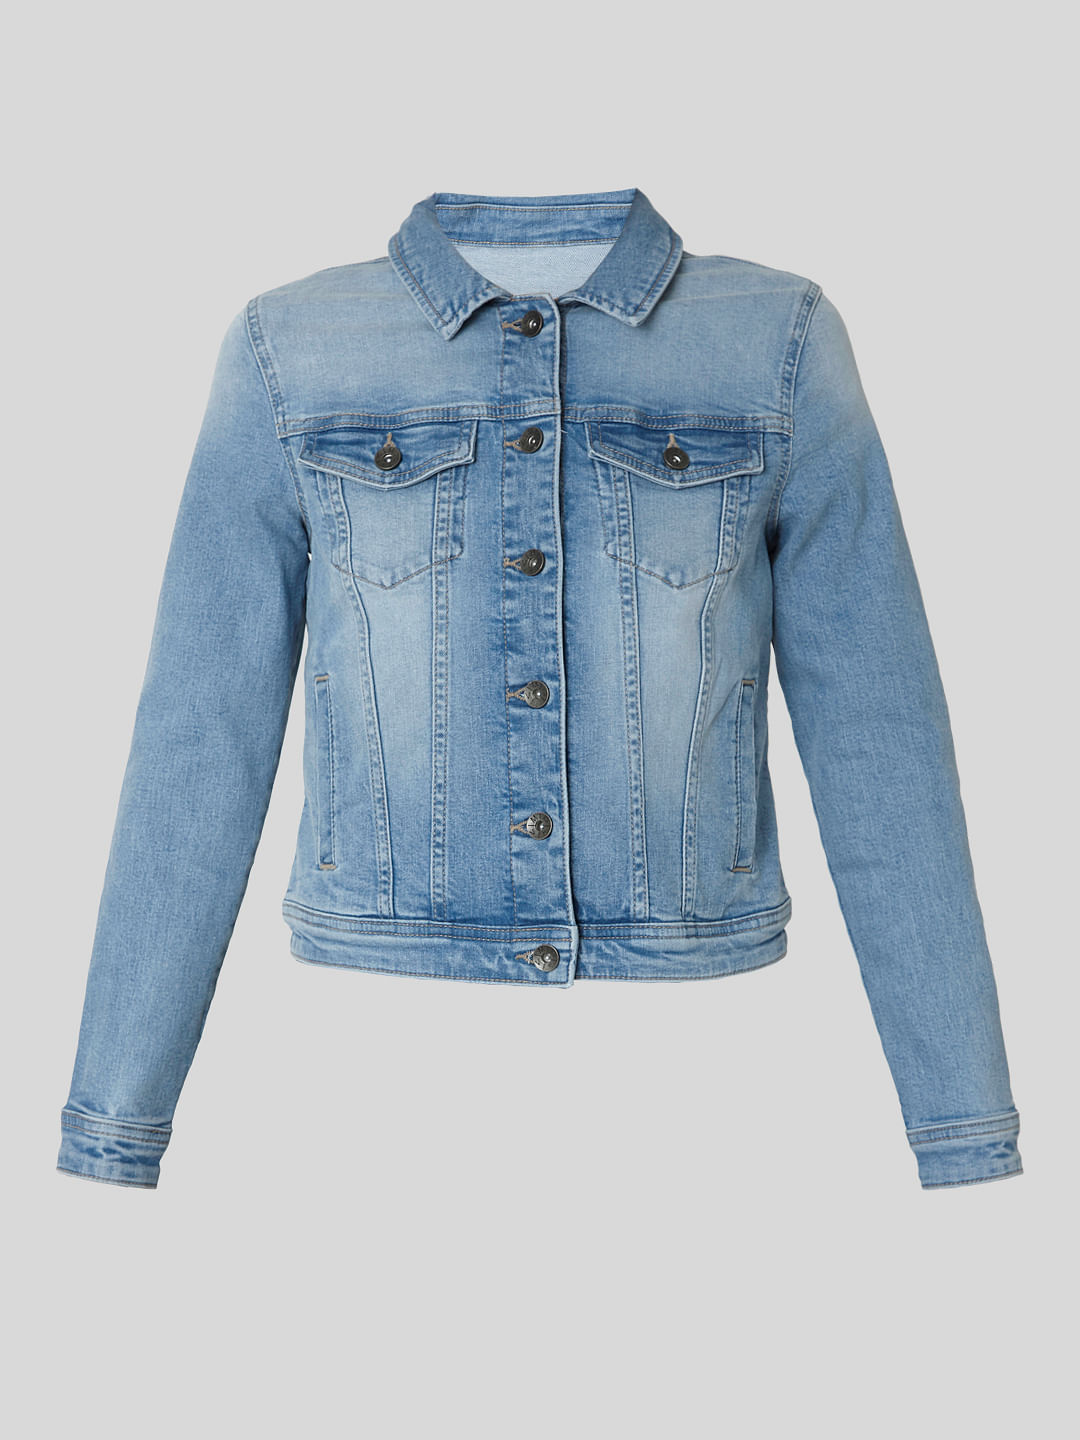 Buy Rigo Blue Denim Jacket for Women's Online @ Tata CLiQ